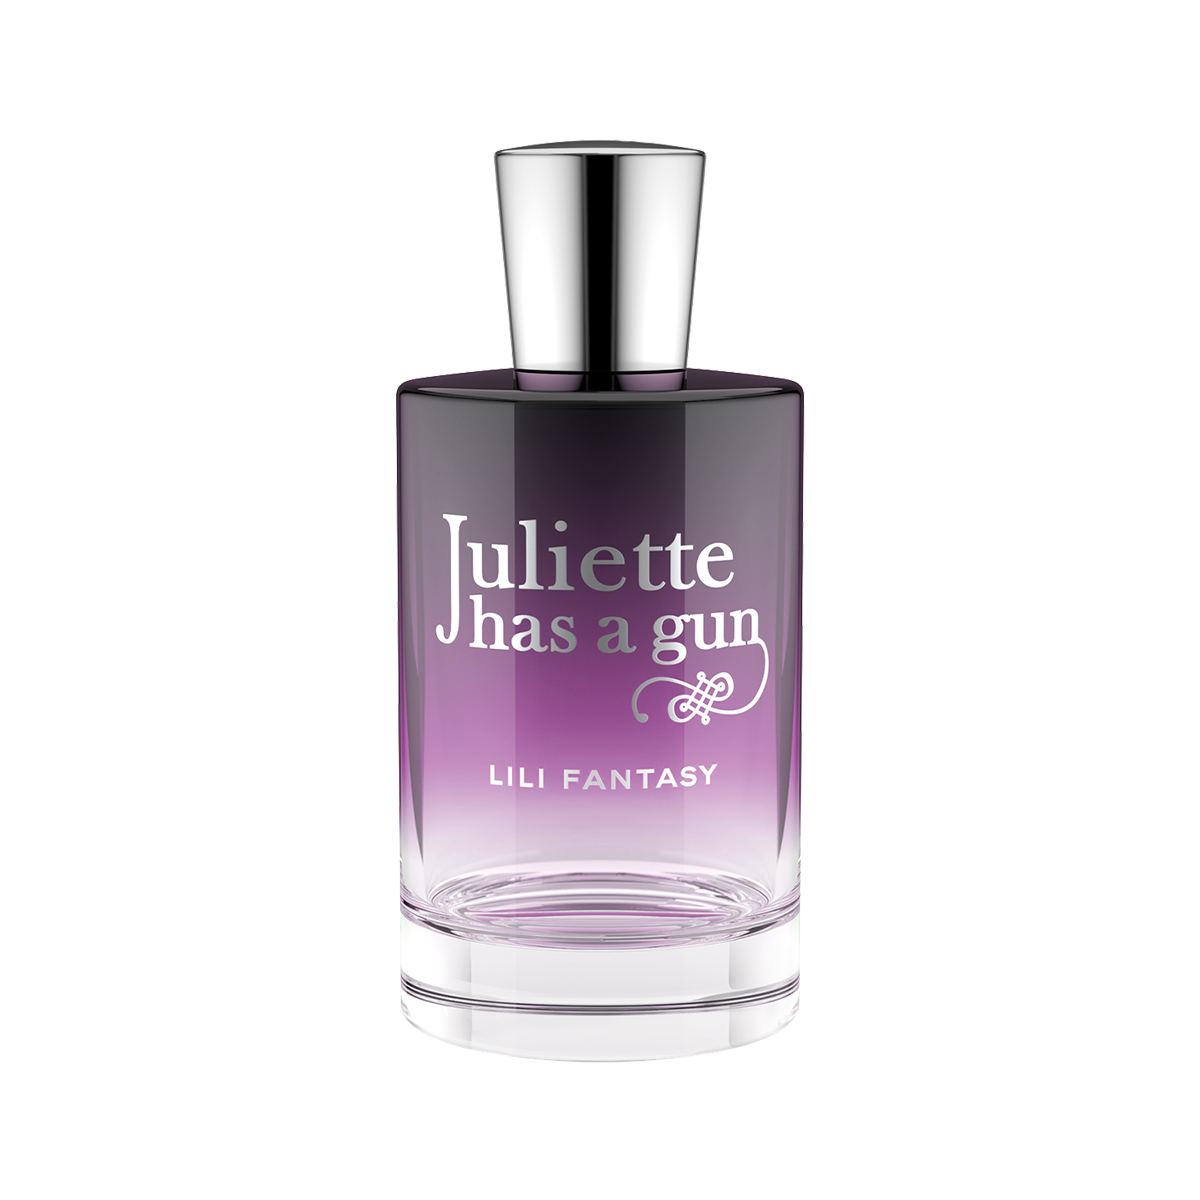 Lili Fantasy <br> Eau de Parfum 50ml / 100ml